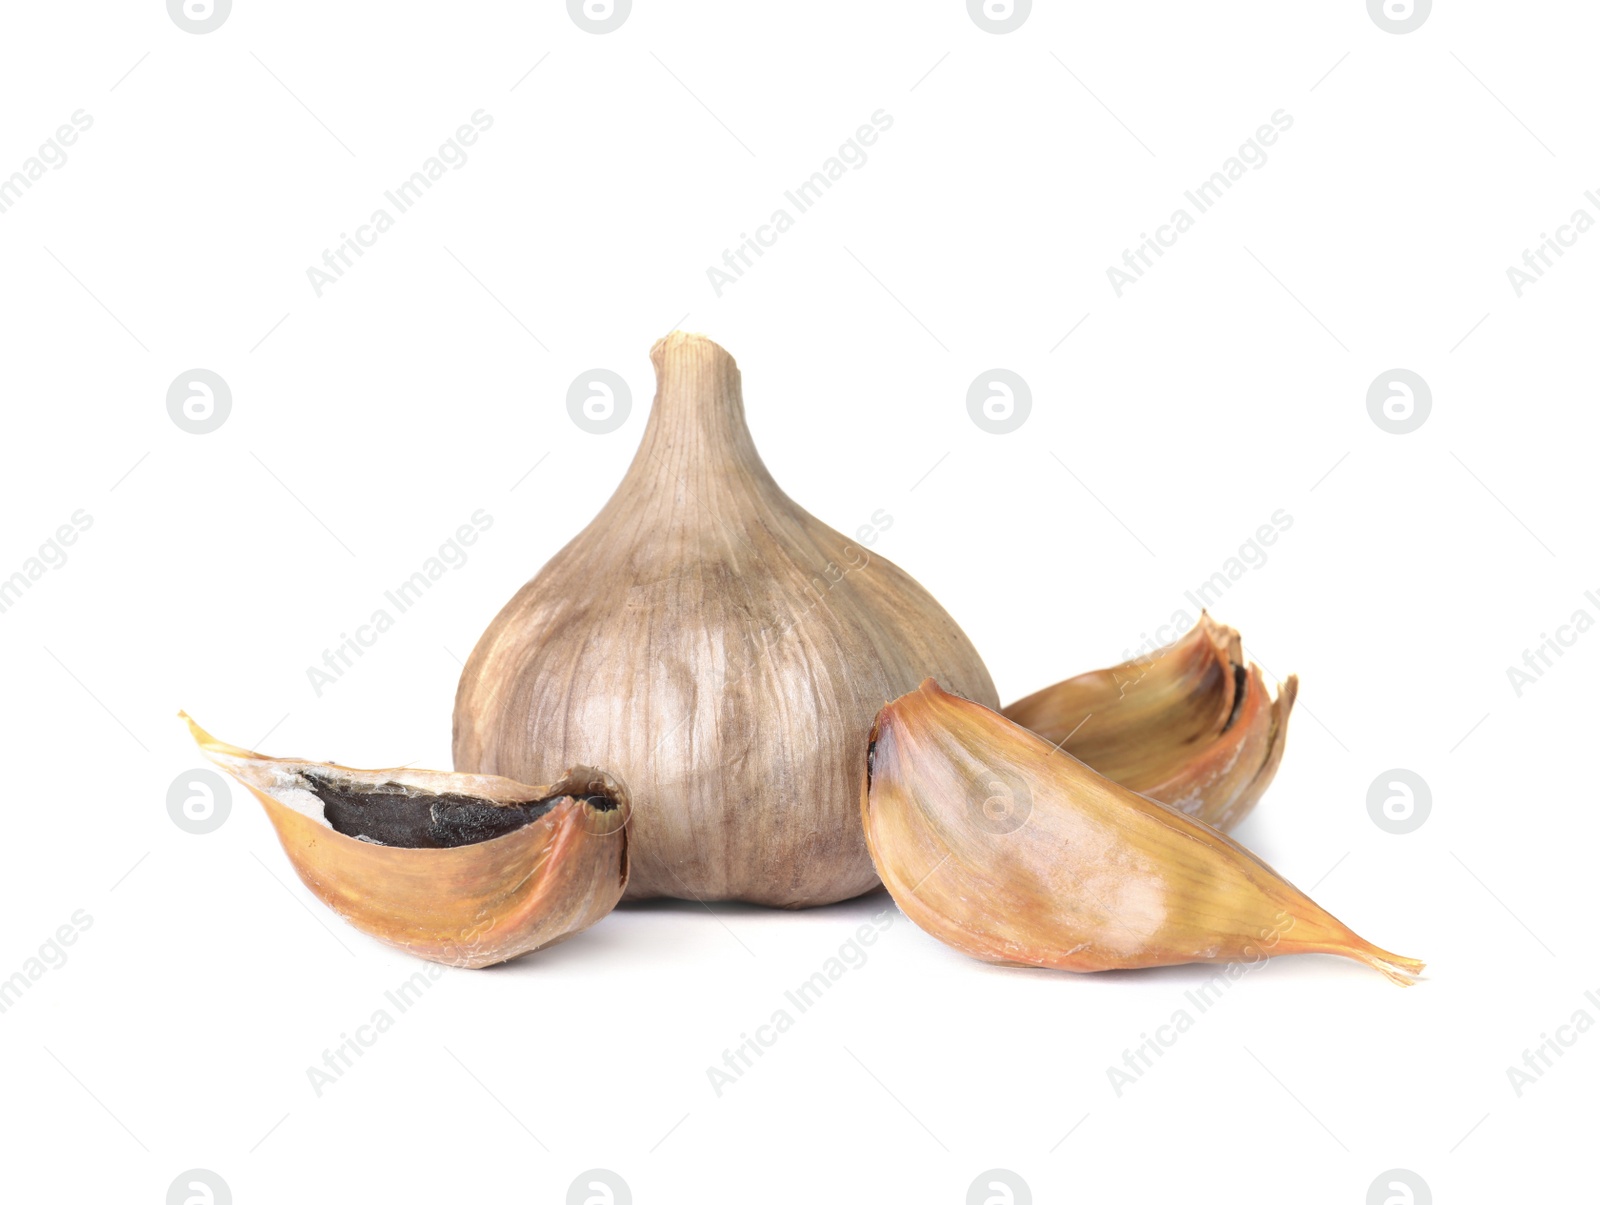 Photo of Aged black garlic on white background. Asian cuisine